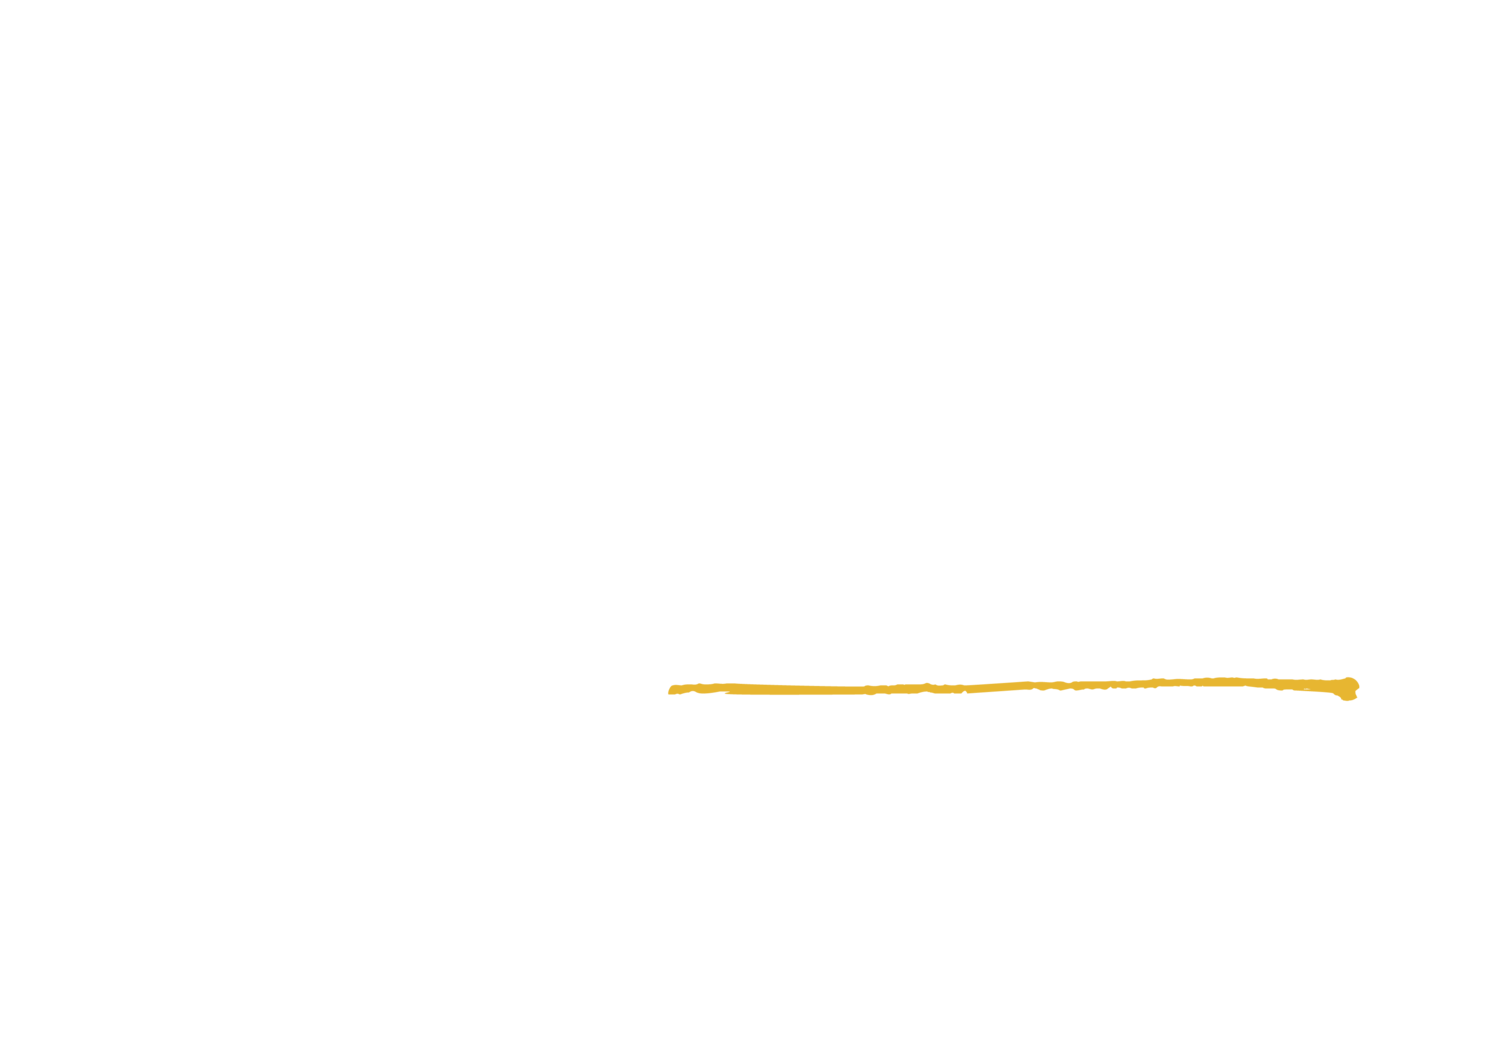 Jarrett Arena Mirrors